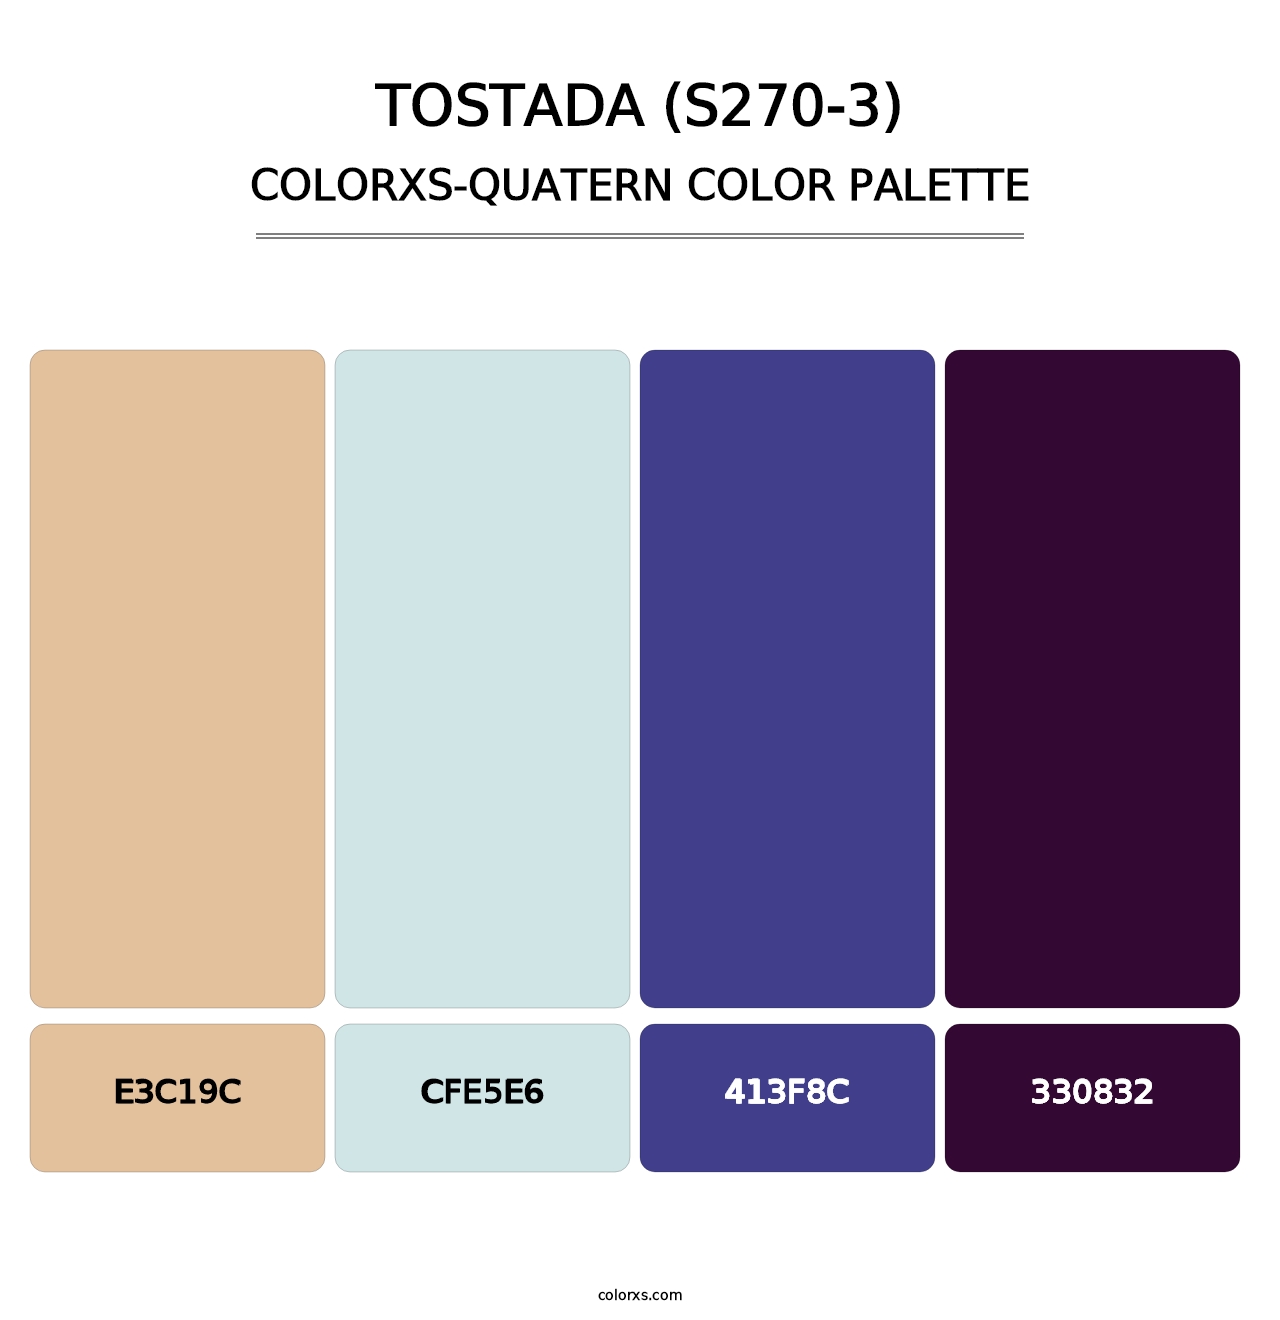 Tostada (S270-3) - Colorxs Quatern Palette